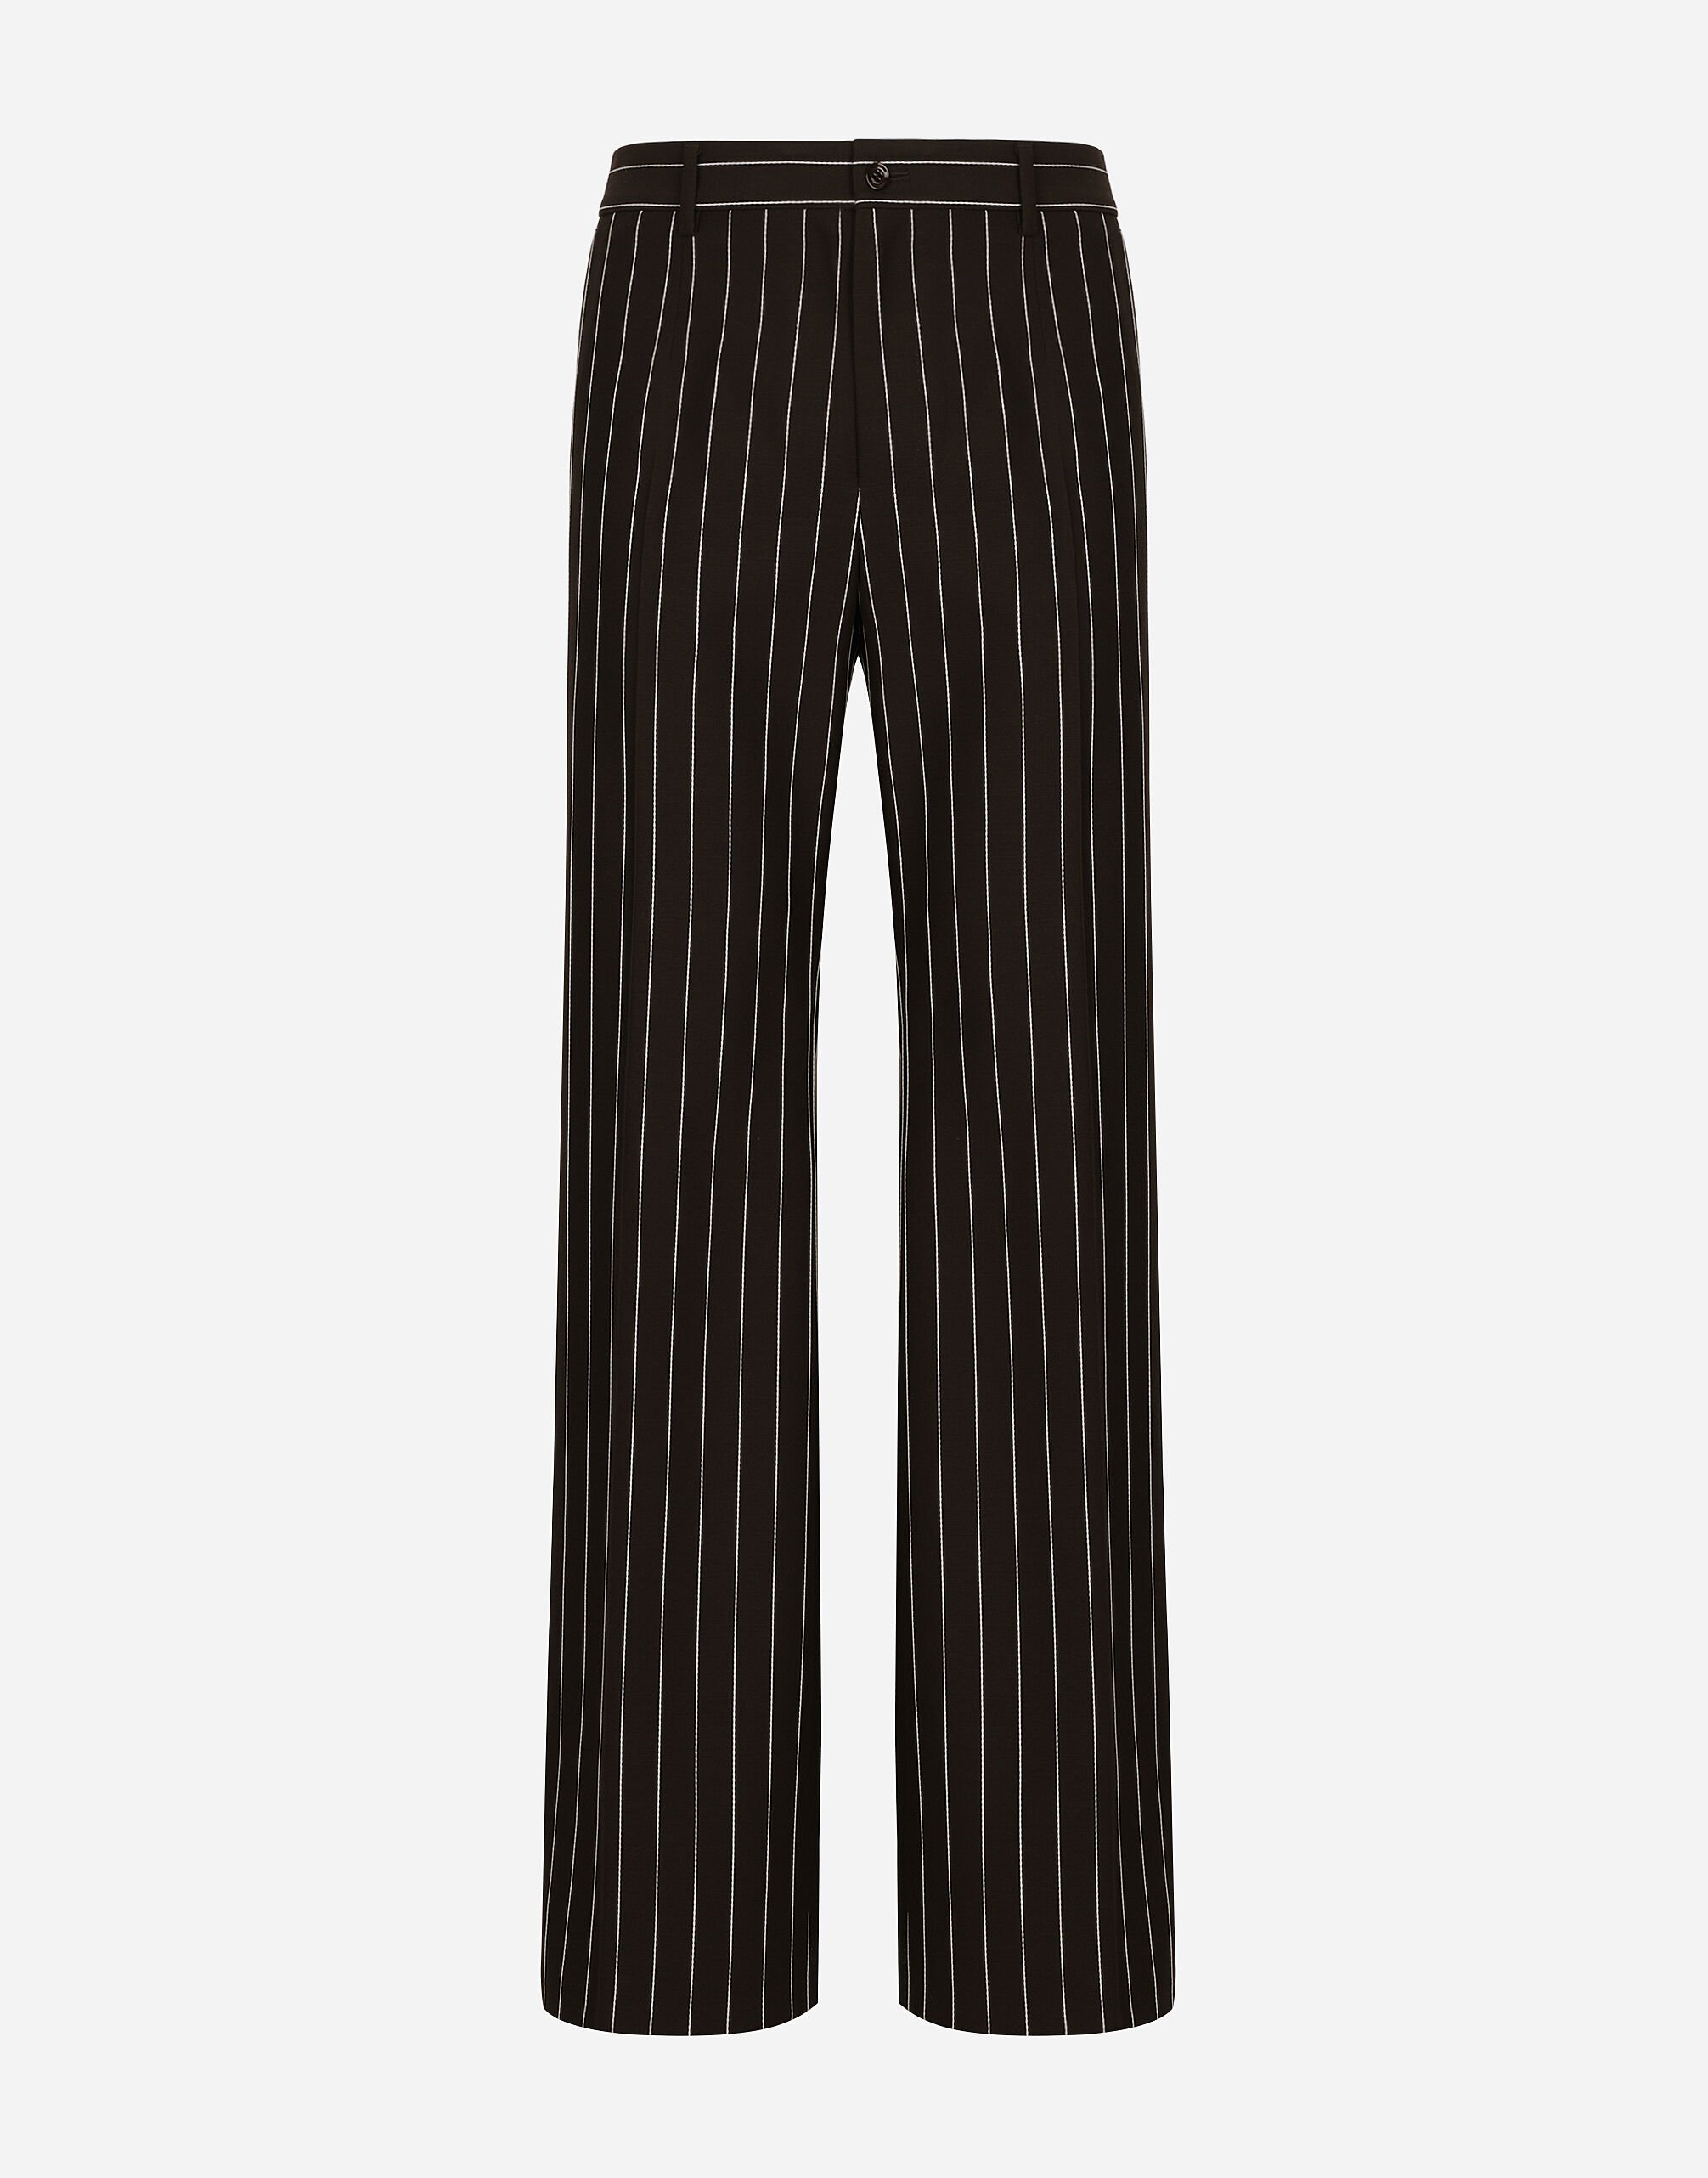 Dolce & Gabbana Tailored pinstripe wool pants Brown GV1FXTHUMG4